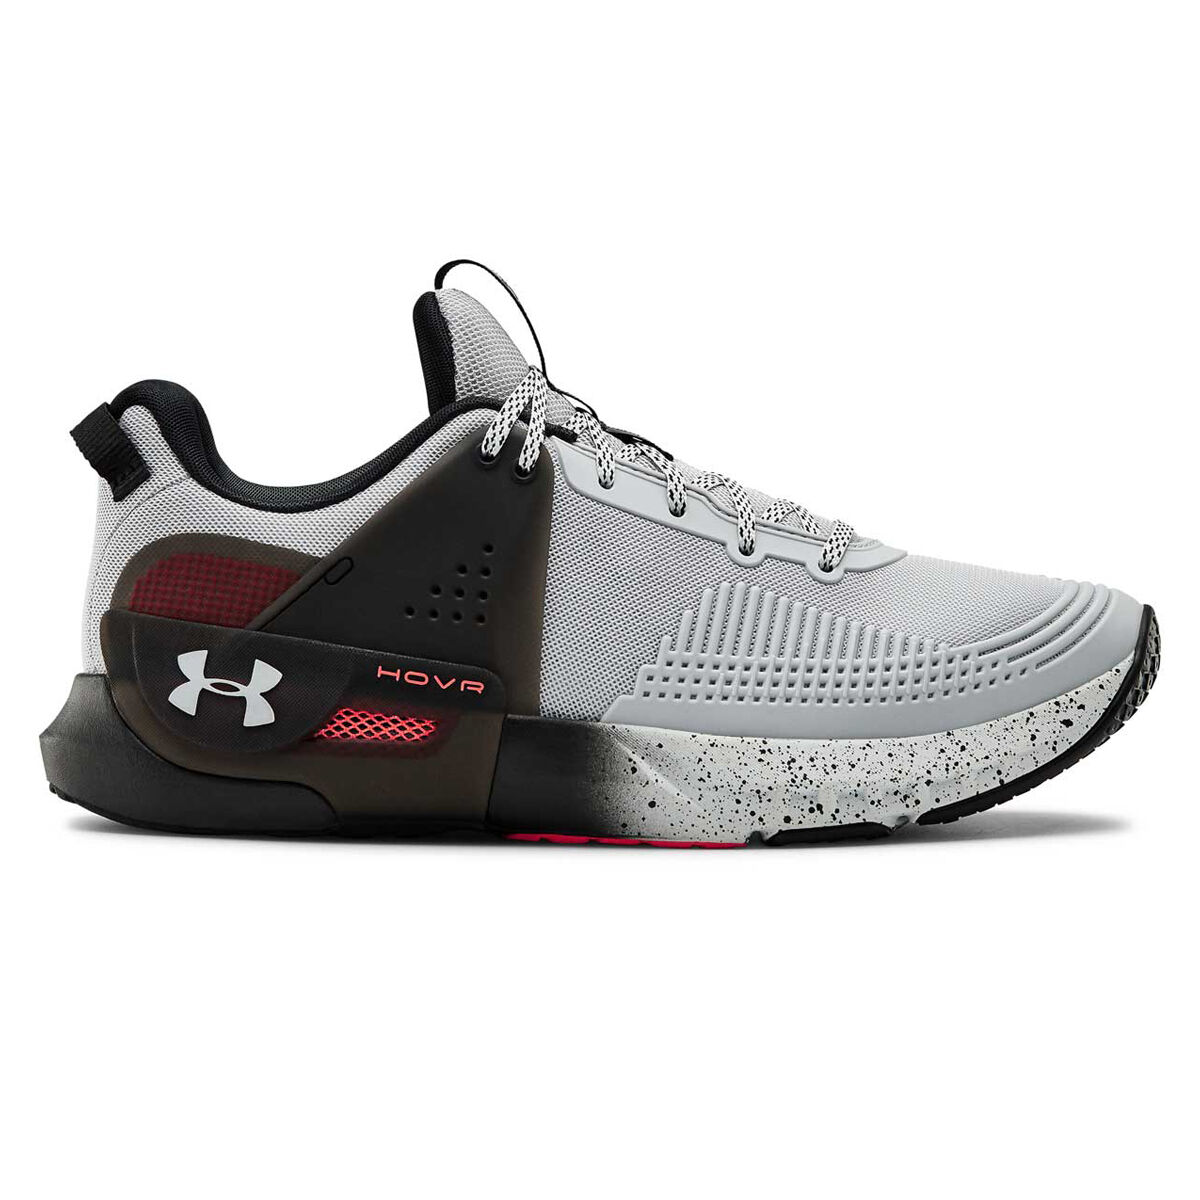 rebel sport cross trainer shoes